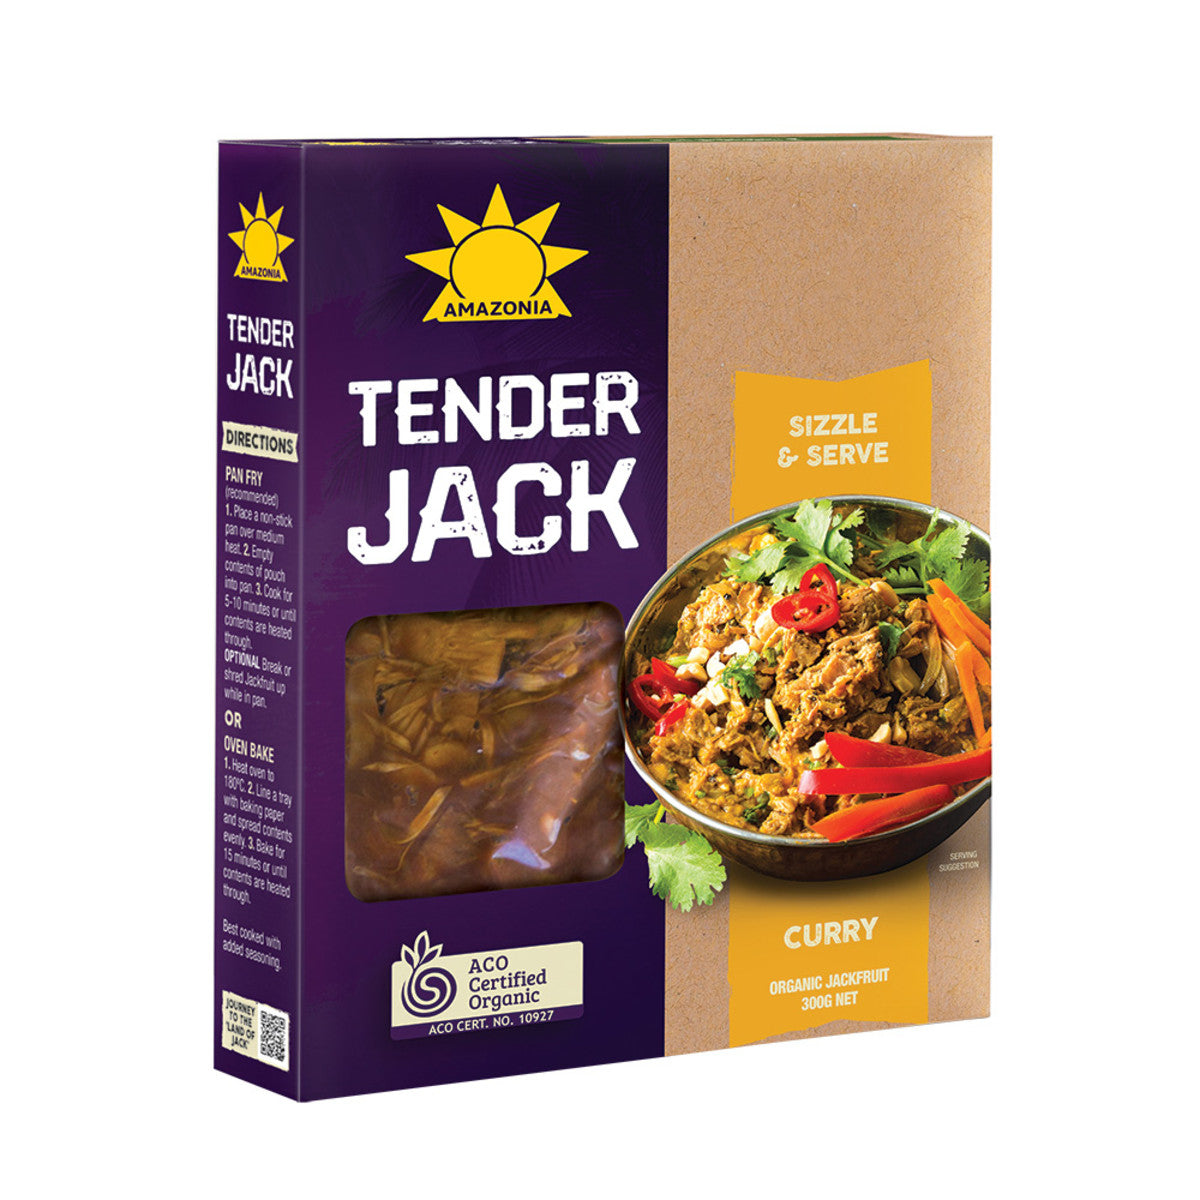 Amazonia - Tender Jack (Curry)